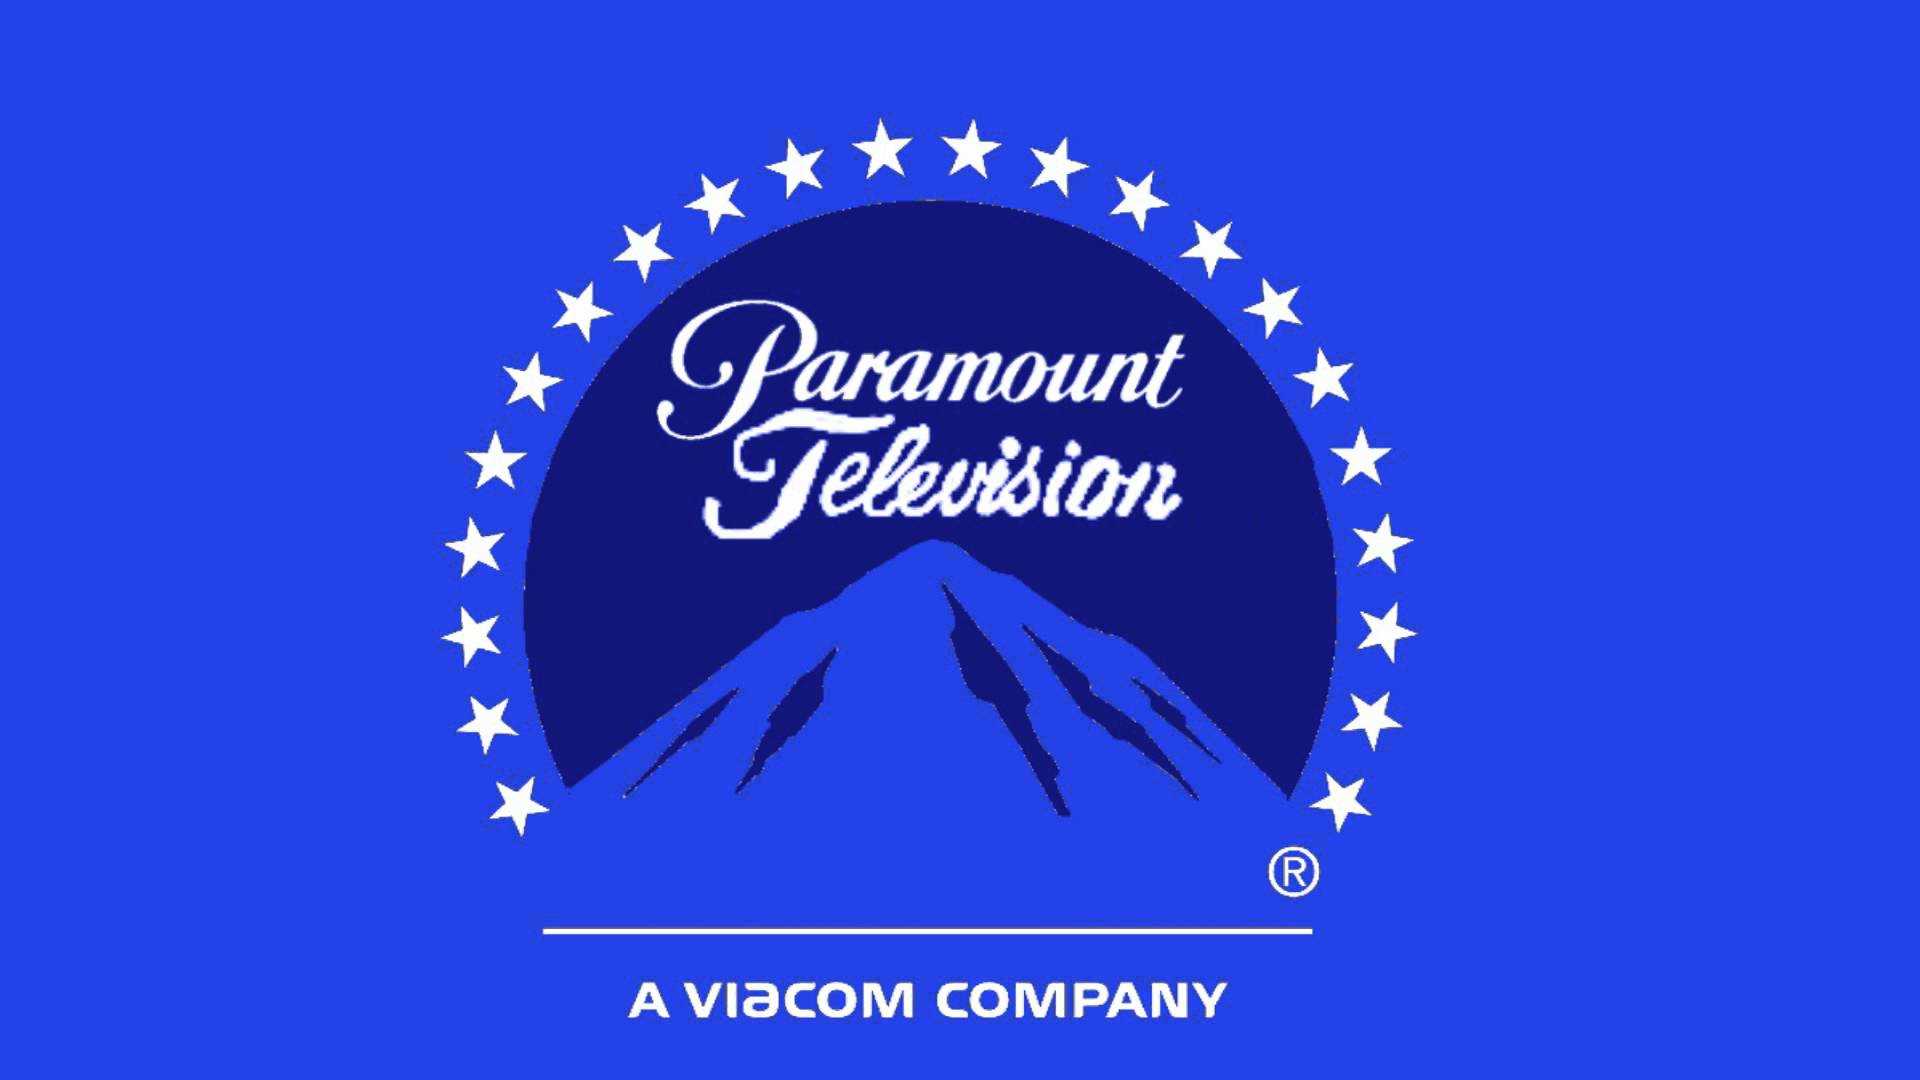 Paramount TV Logo - Paramount television Logos